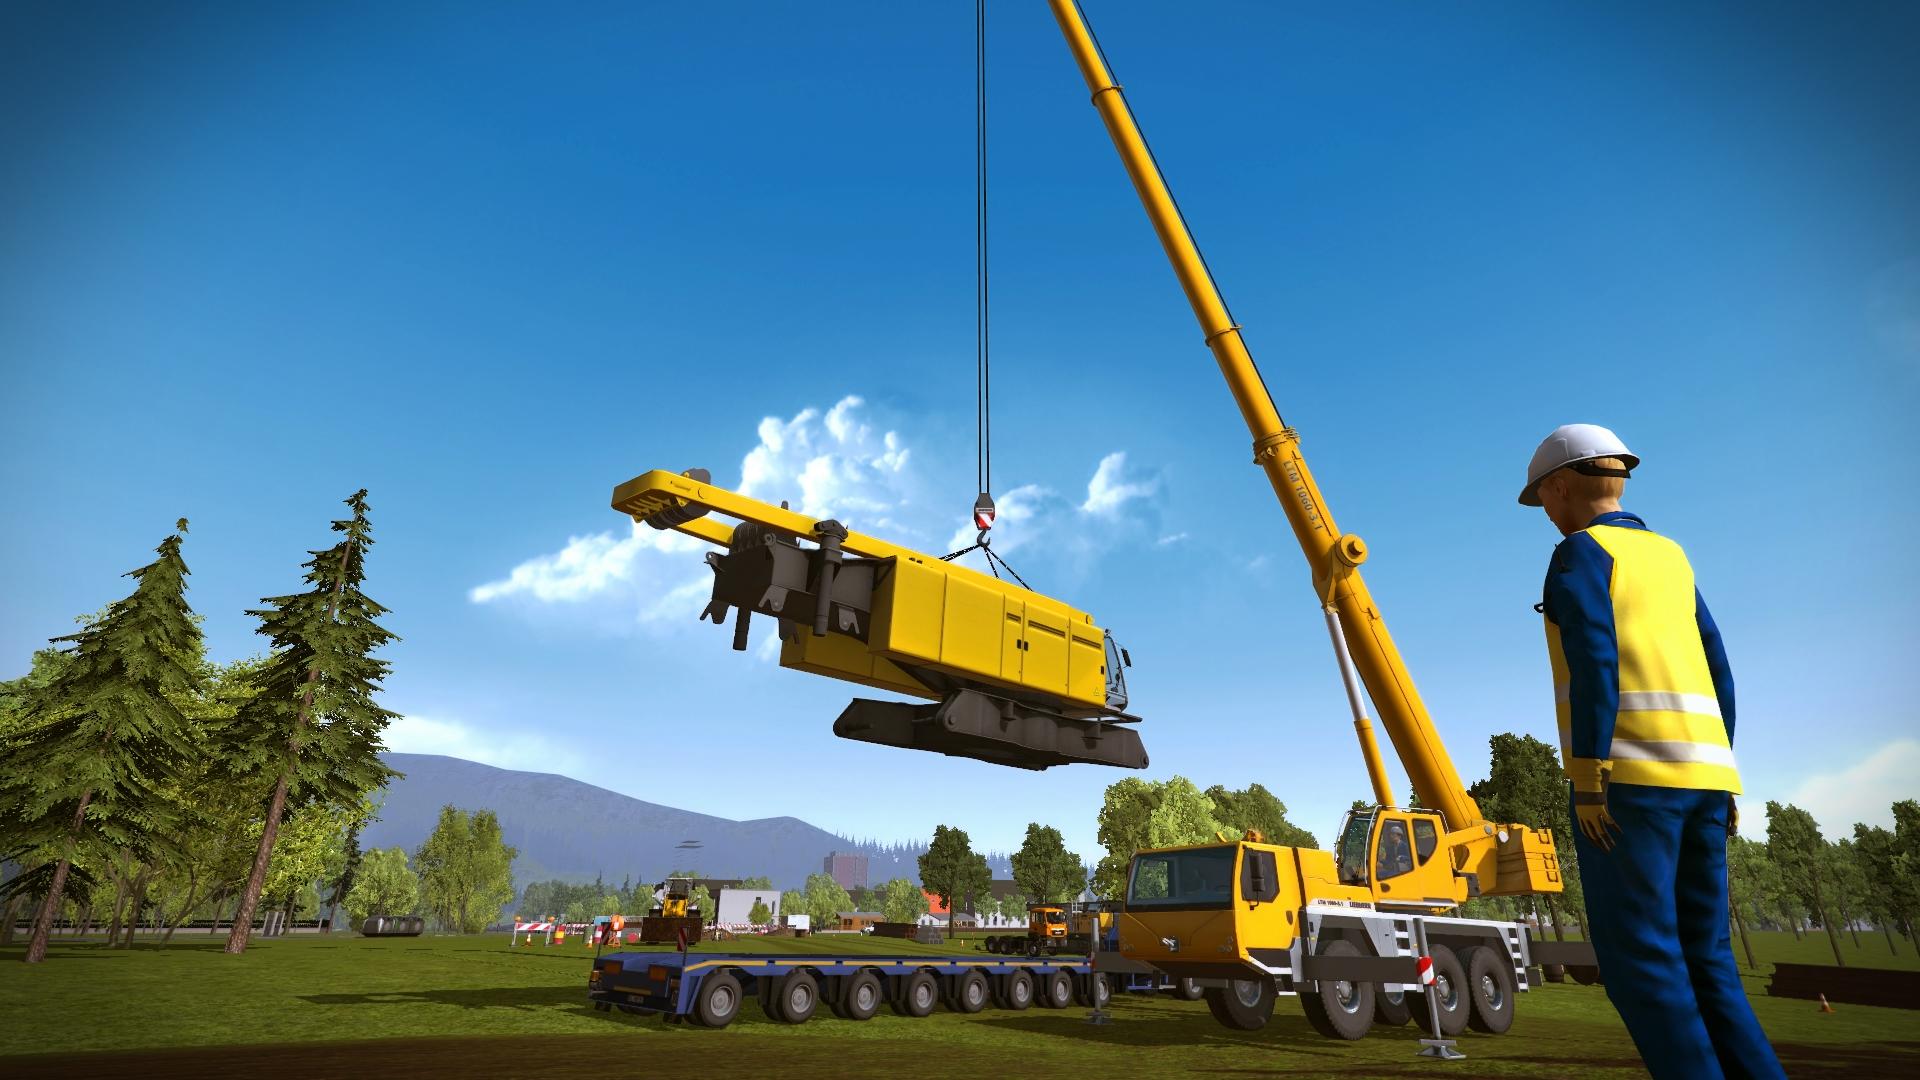 Screenshot №10 from game Construction Simulator 2015